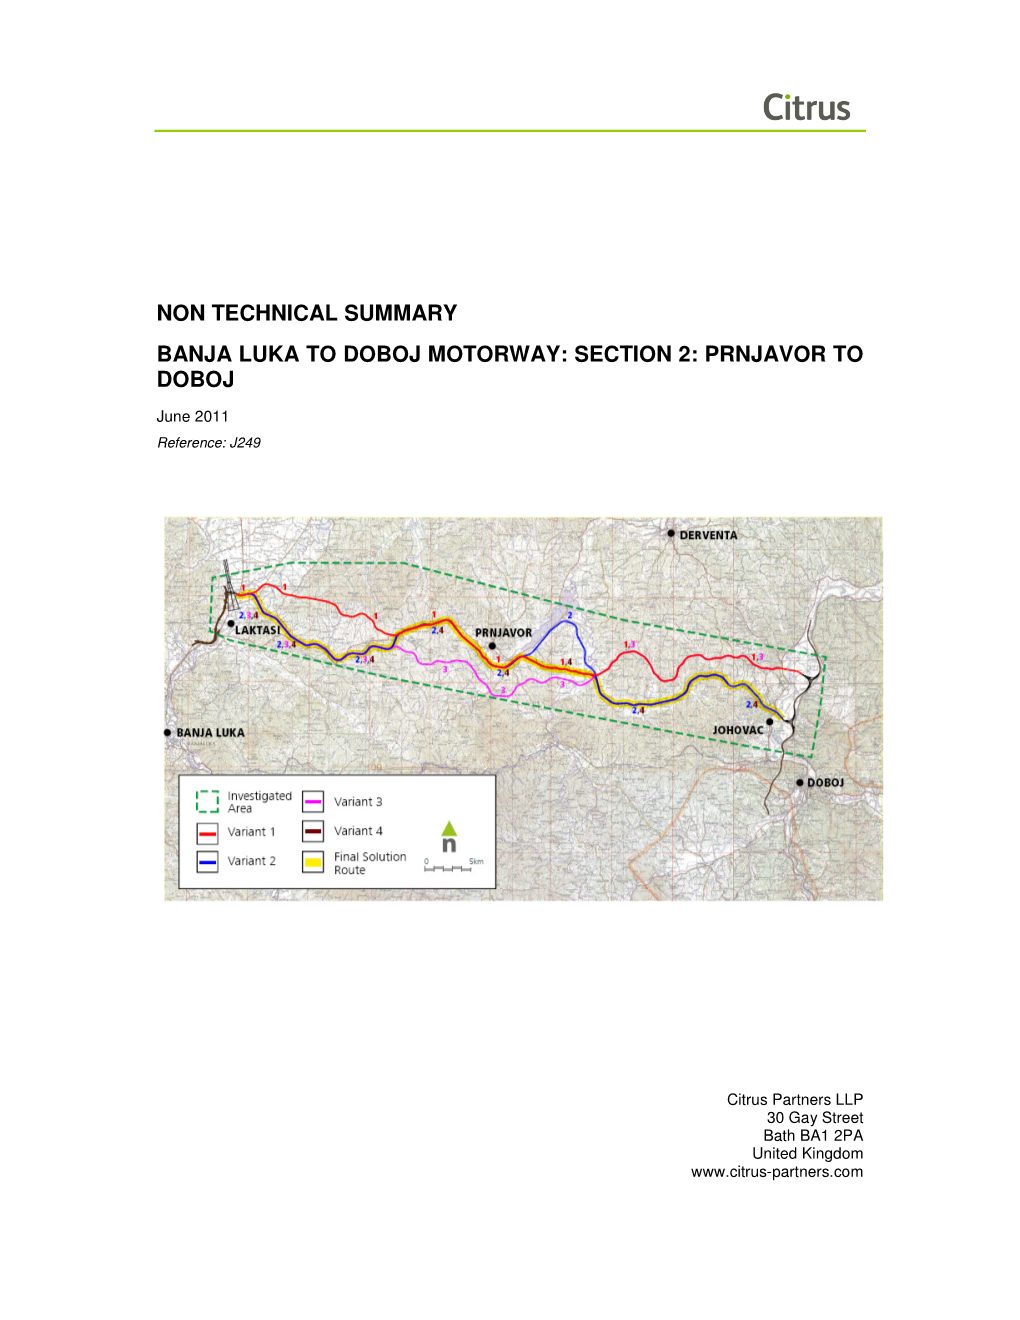 Non Technical Summary Banja Luka to Doboj Motorway: Section 2: Prnjavor to Doboj